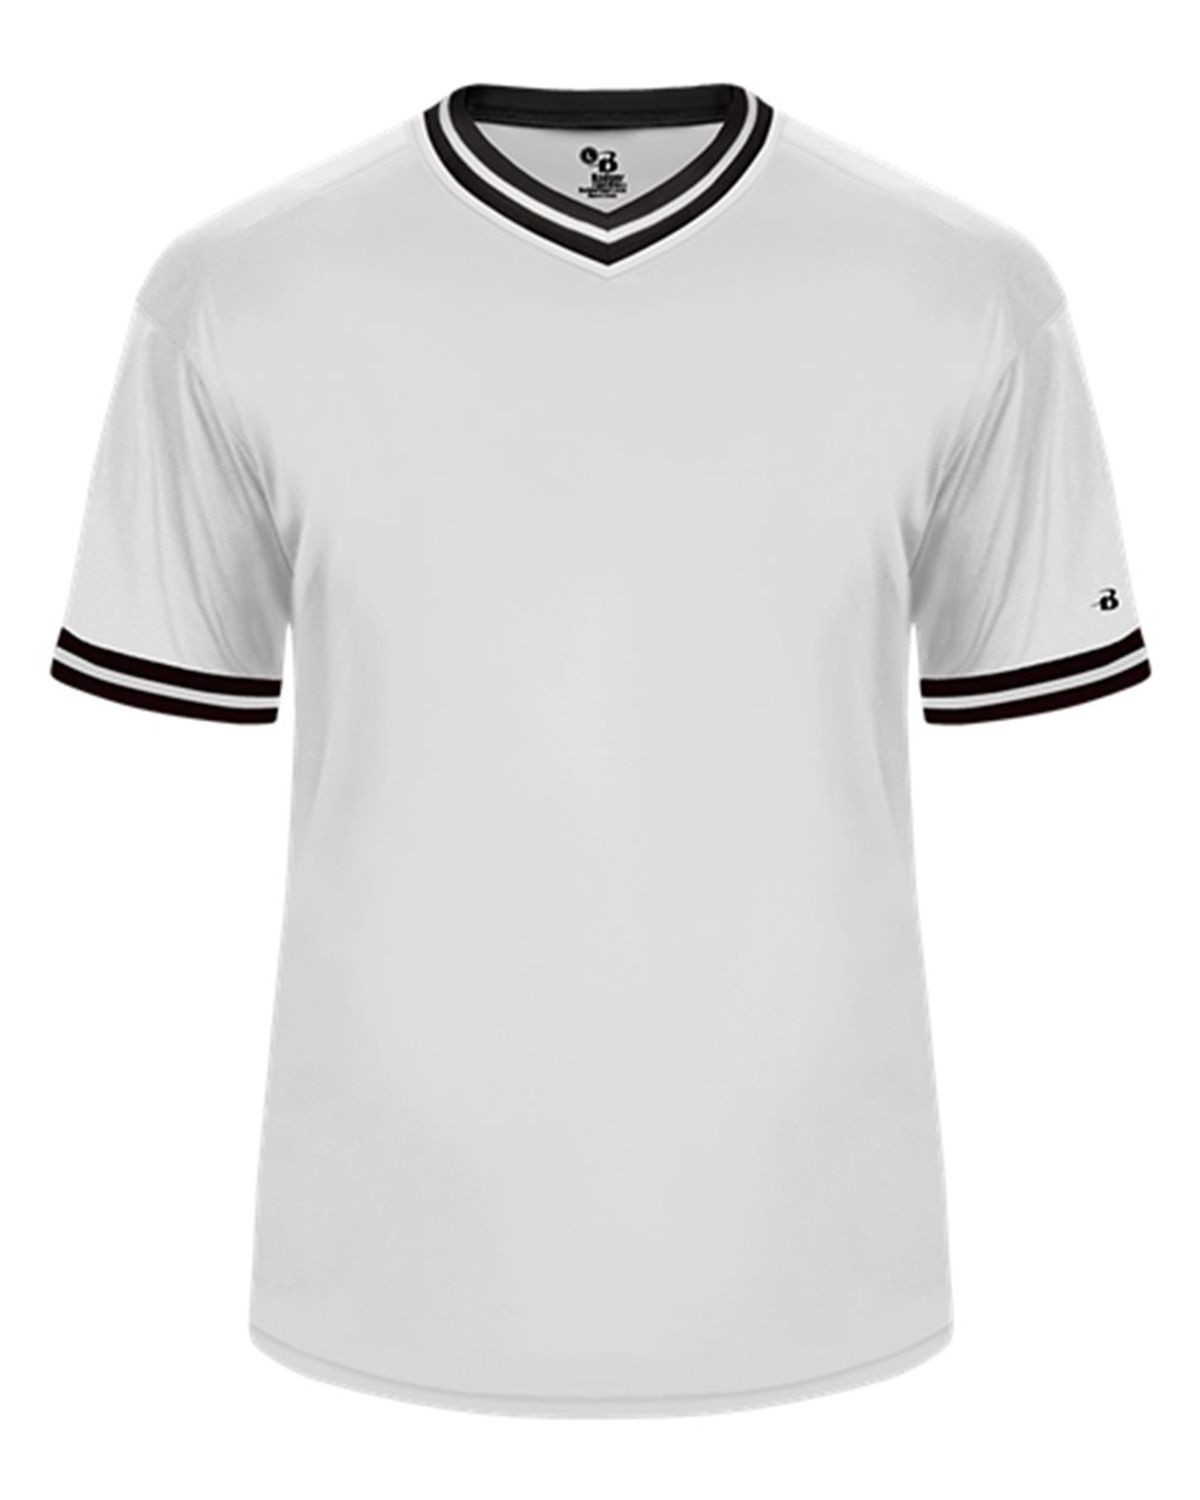 Badger 7974 Men's Vintage Jersey - White/ Black/ White - XS #vintage